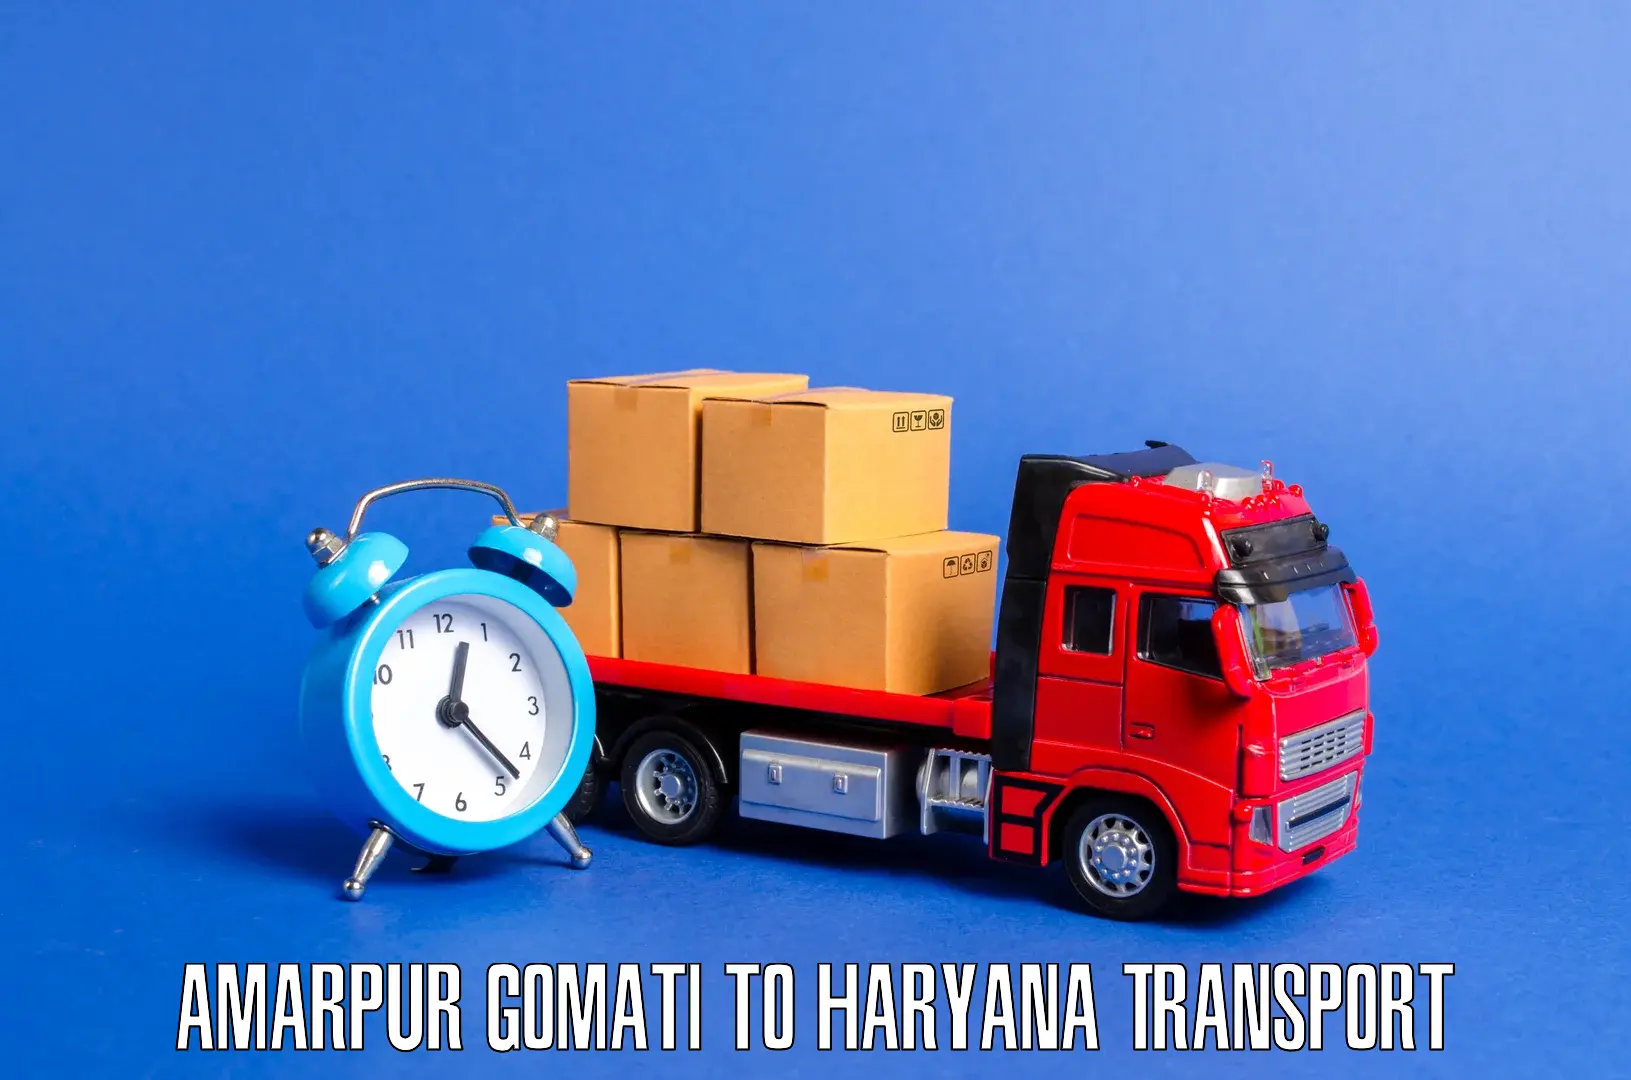 Bike transport service Amarpur Gomati to Haryana